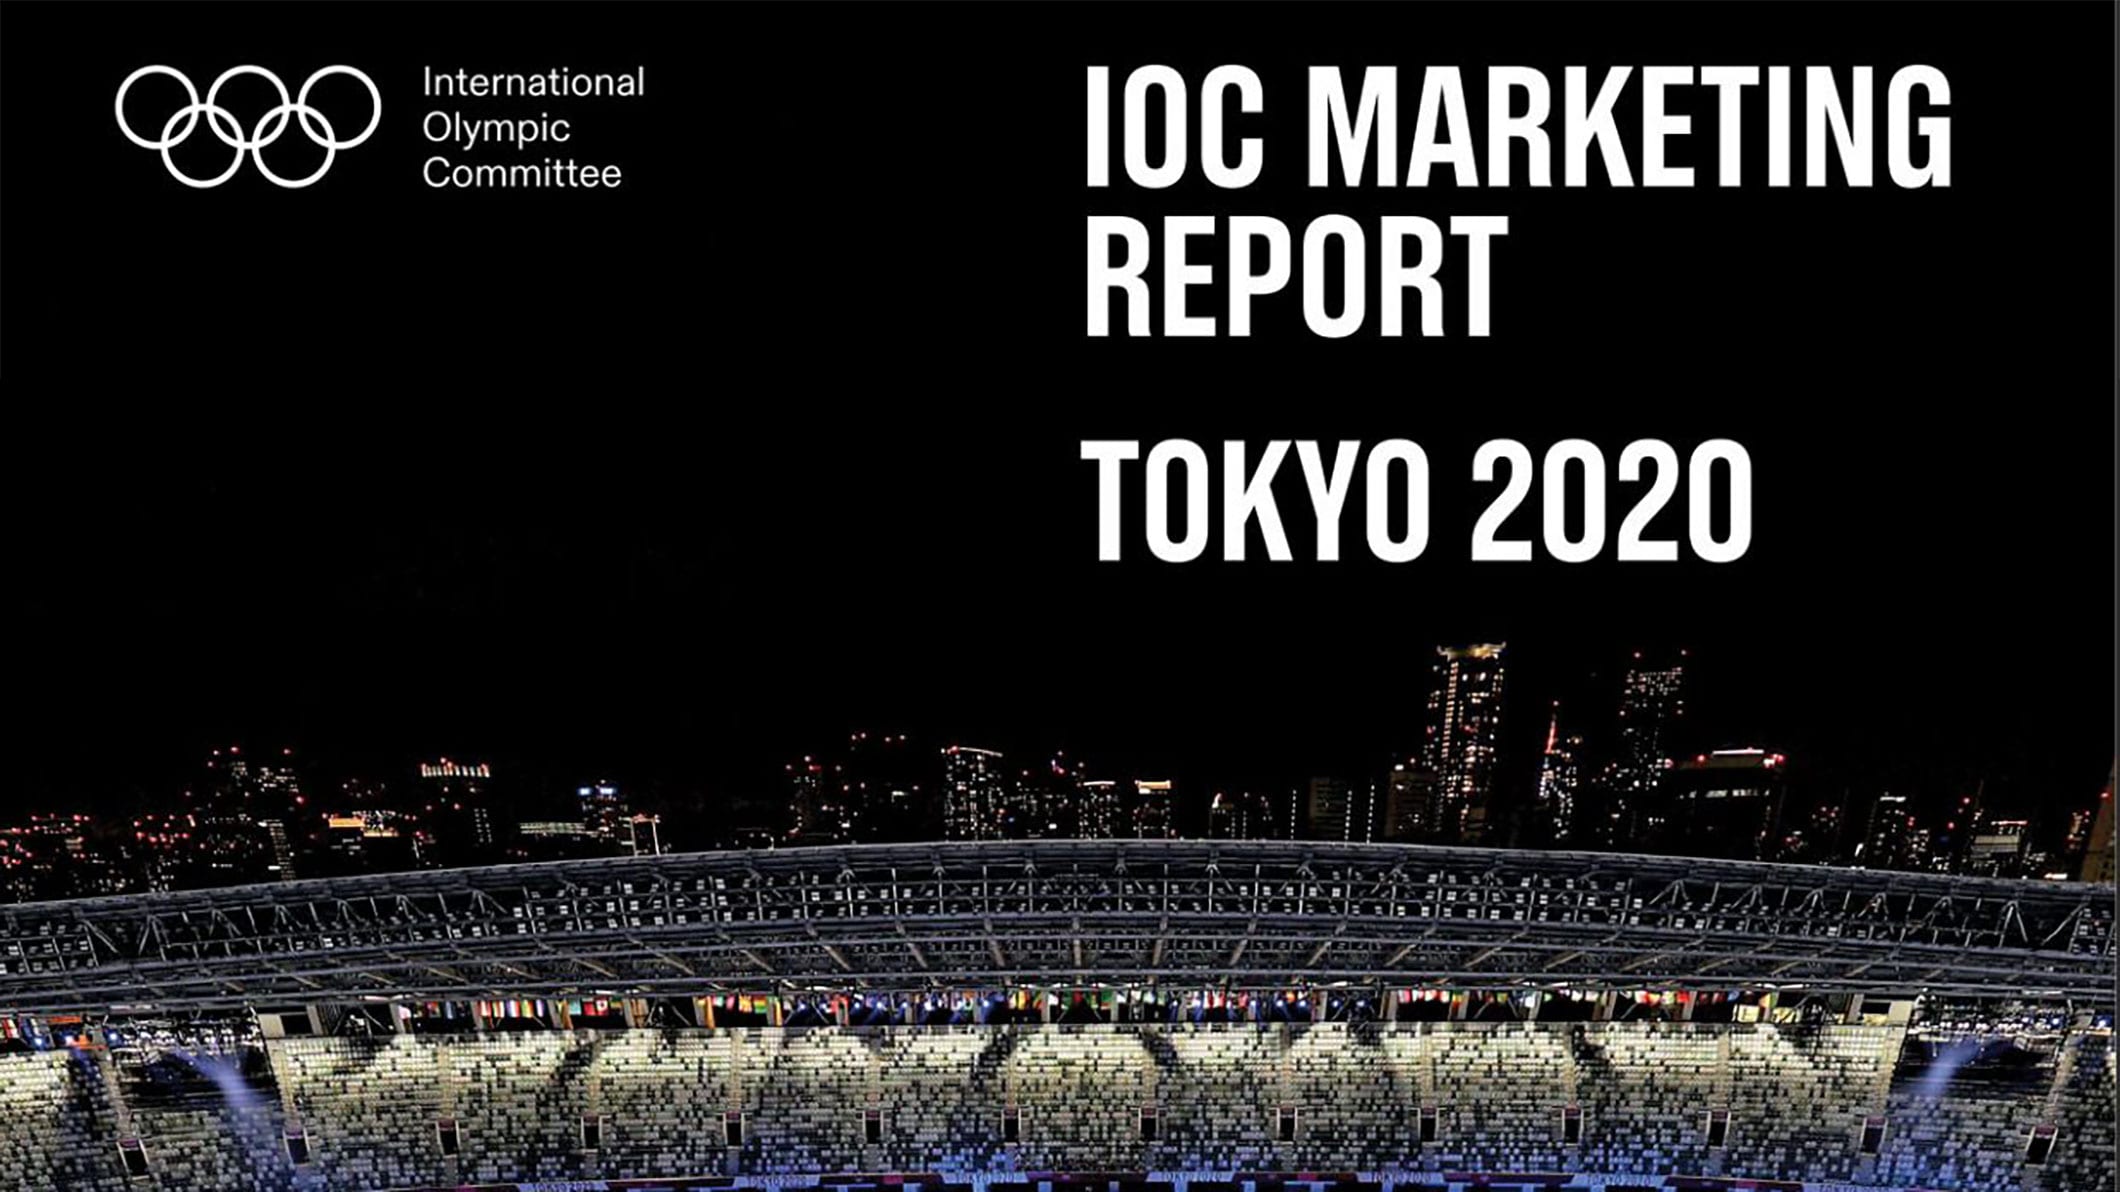 IOC Marketing Report for Tokyo 2020